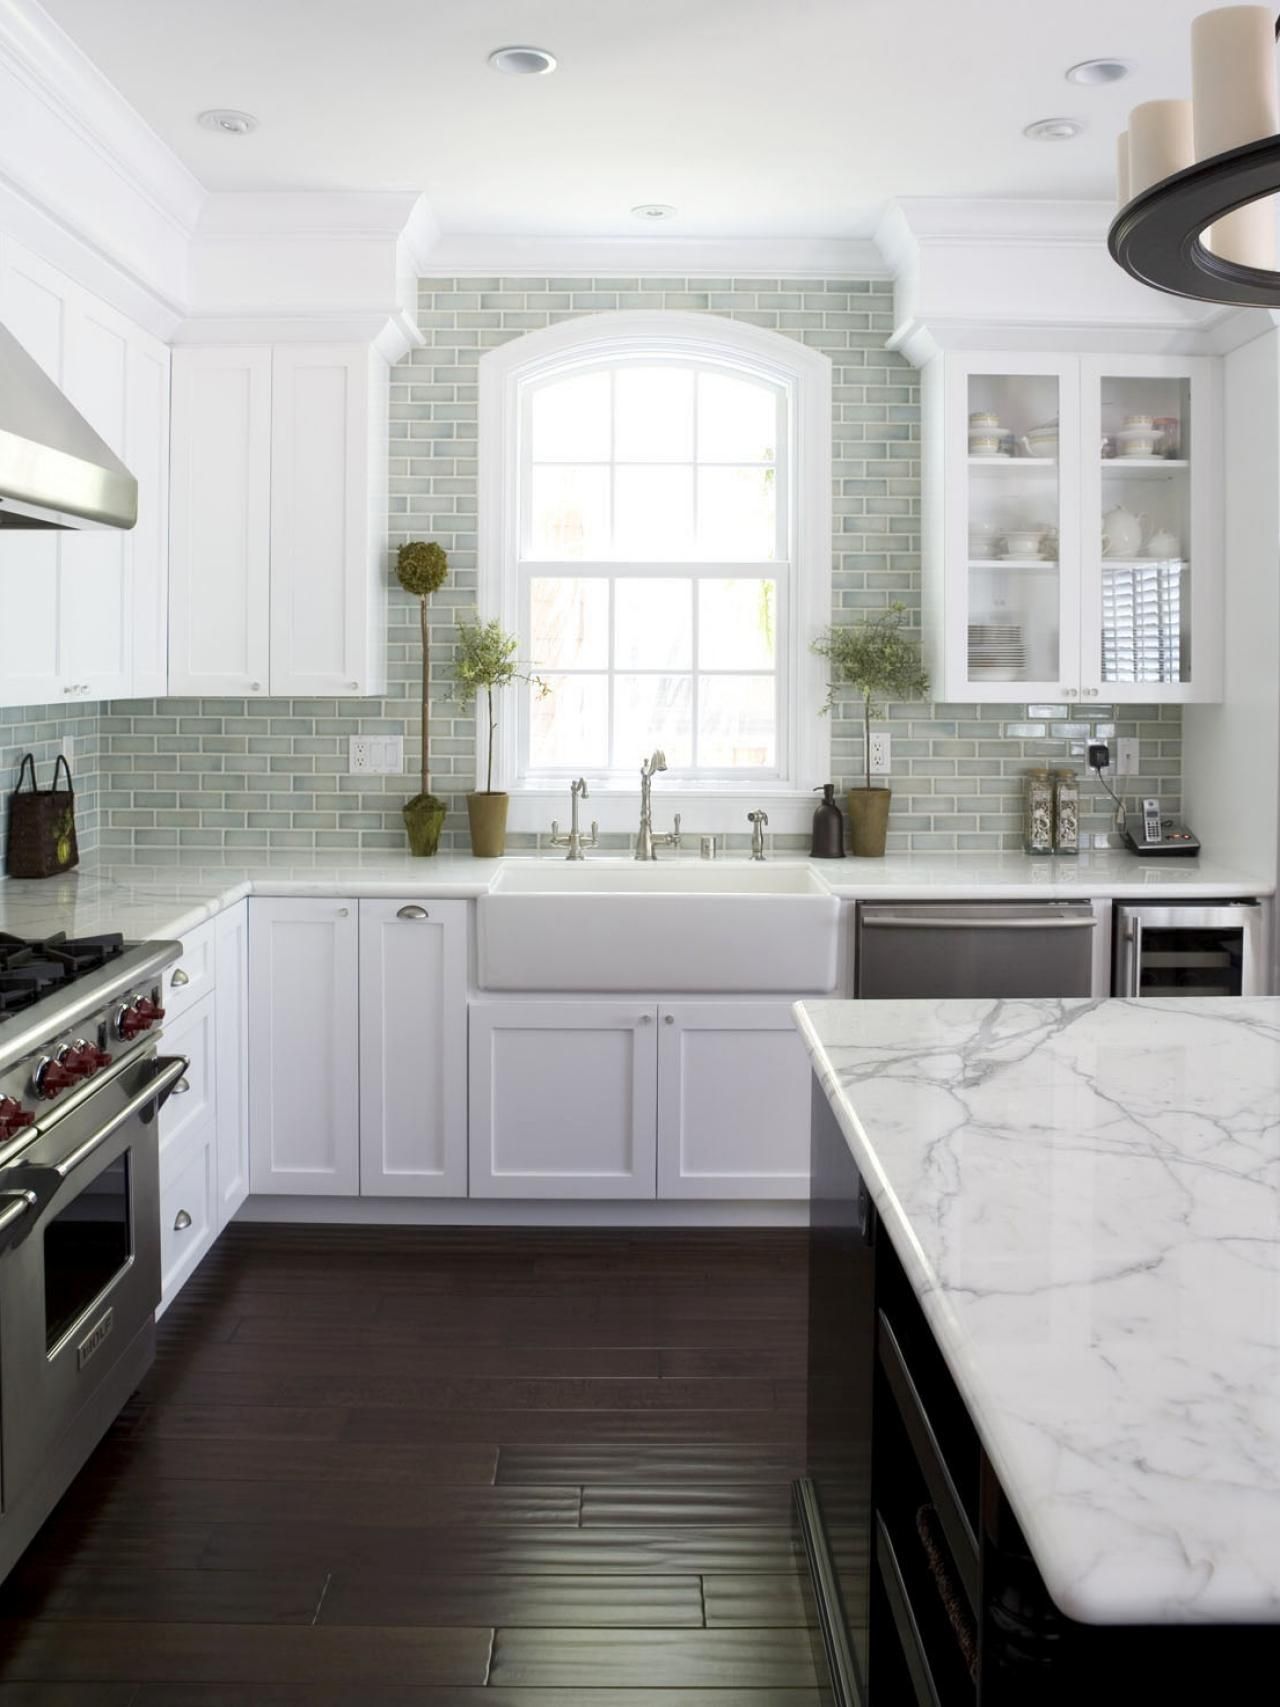 Our 40 Favorite White Kitchens | Kitchen Ideas & Design with Cabinets, Islands, Backsplashes |